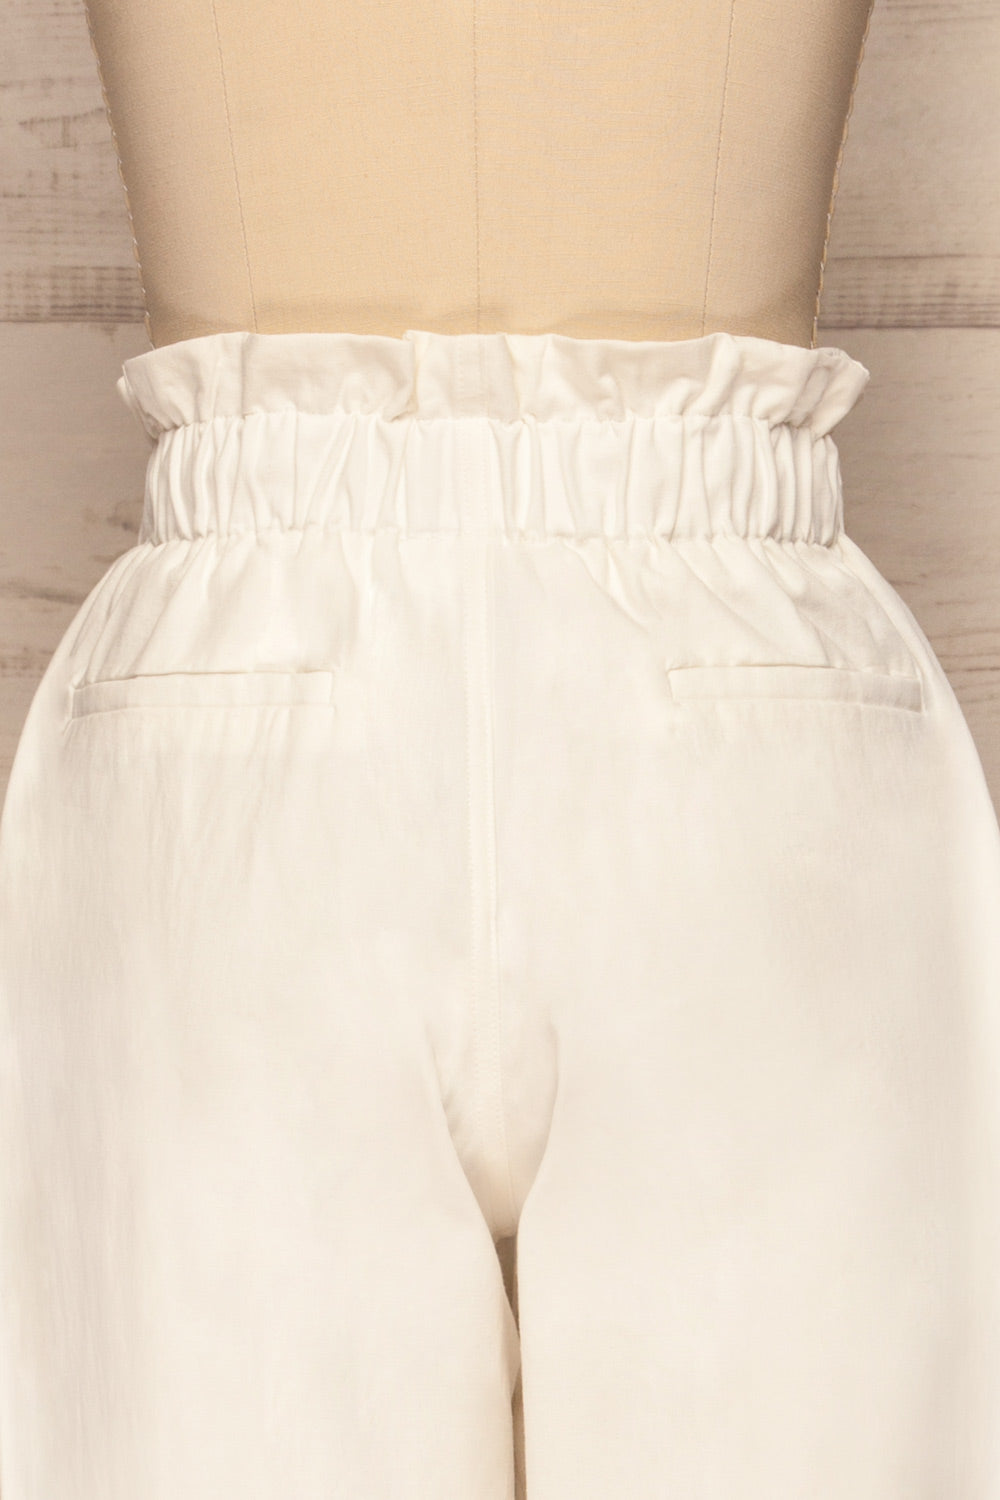 Knyszyn Blanc White High Waist 3/4 Pants back close up | La petite garçonne